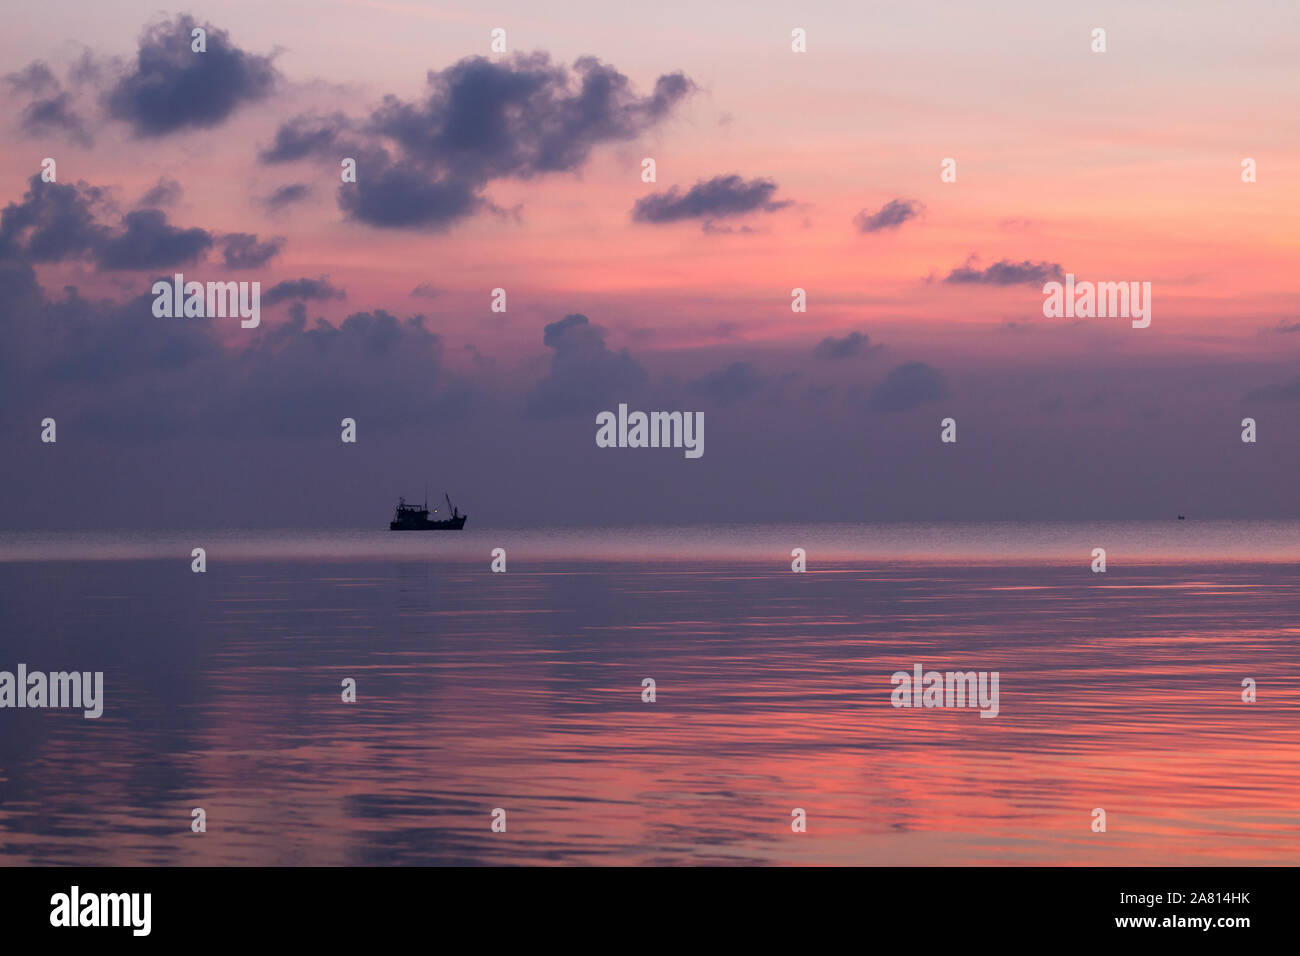 Tranquilla marina all'alba con cielo rosa e distante barca da pesca, Koh Rong isola, Cambogia Foto Stock